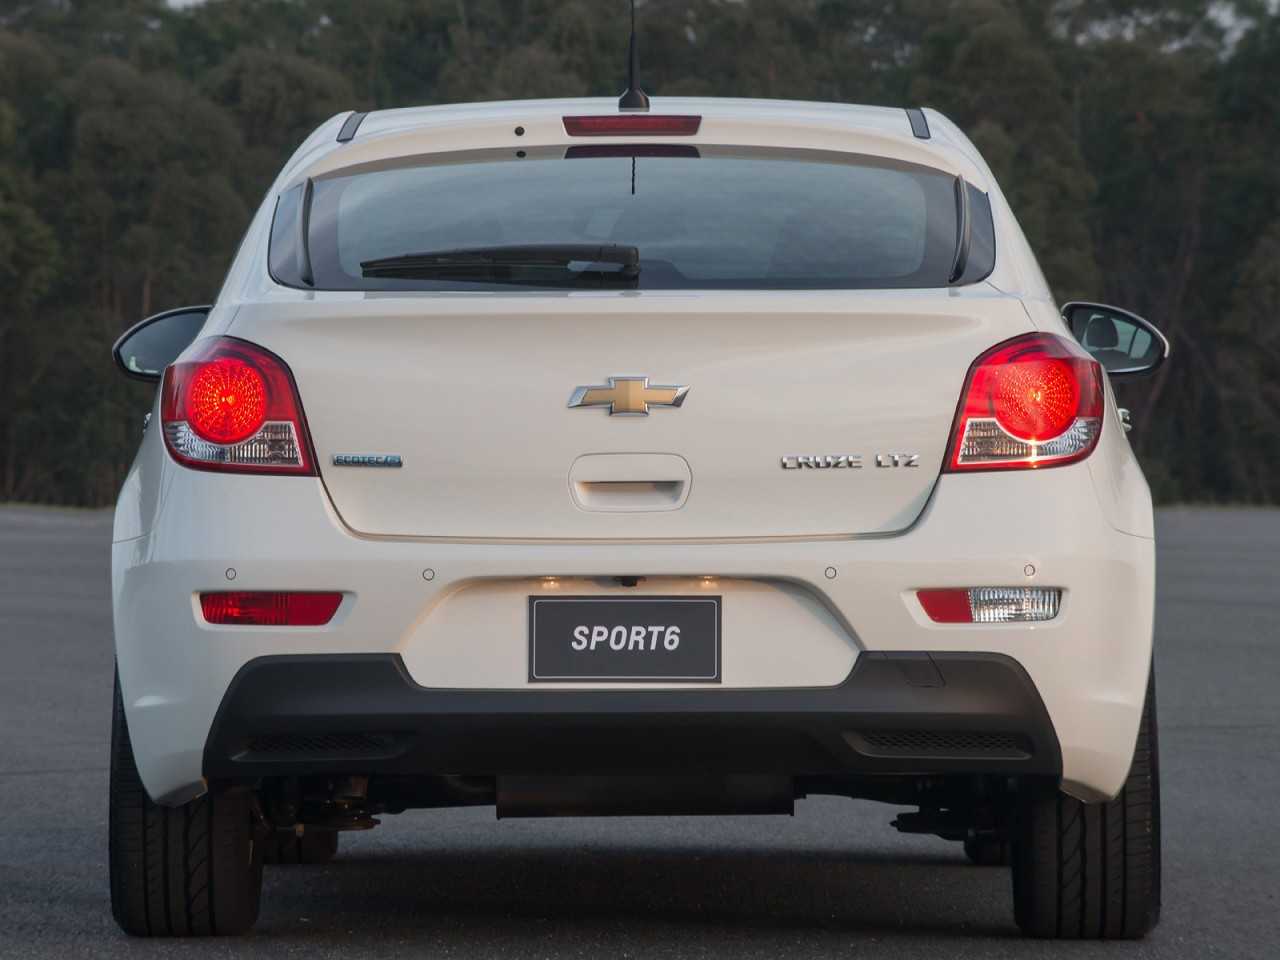 ChevroletCruze Sport6 2015 - traseira